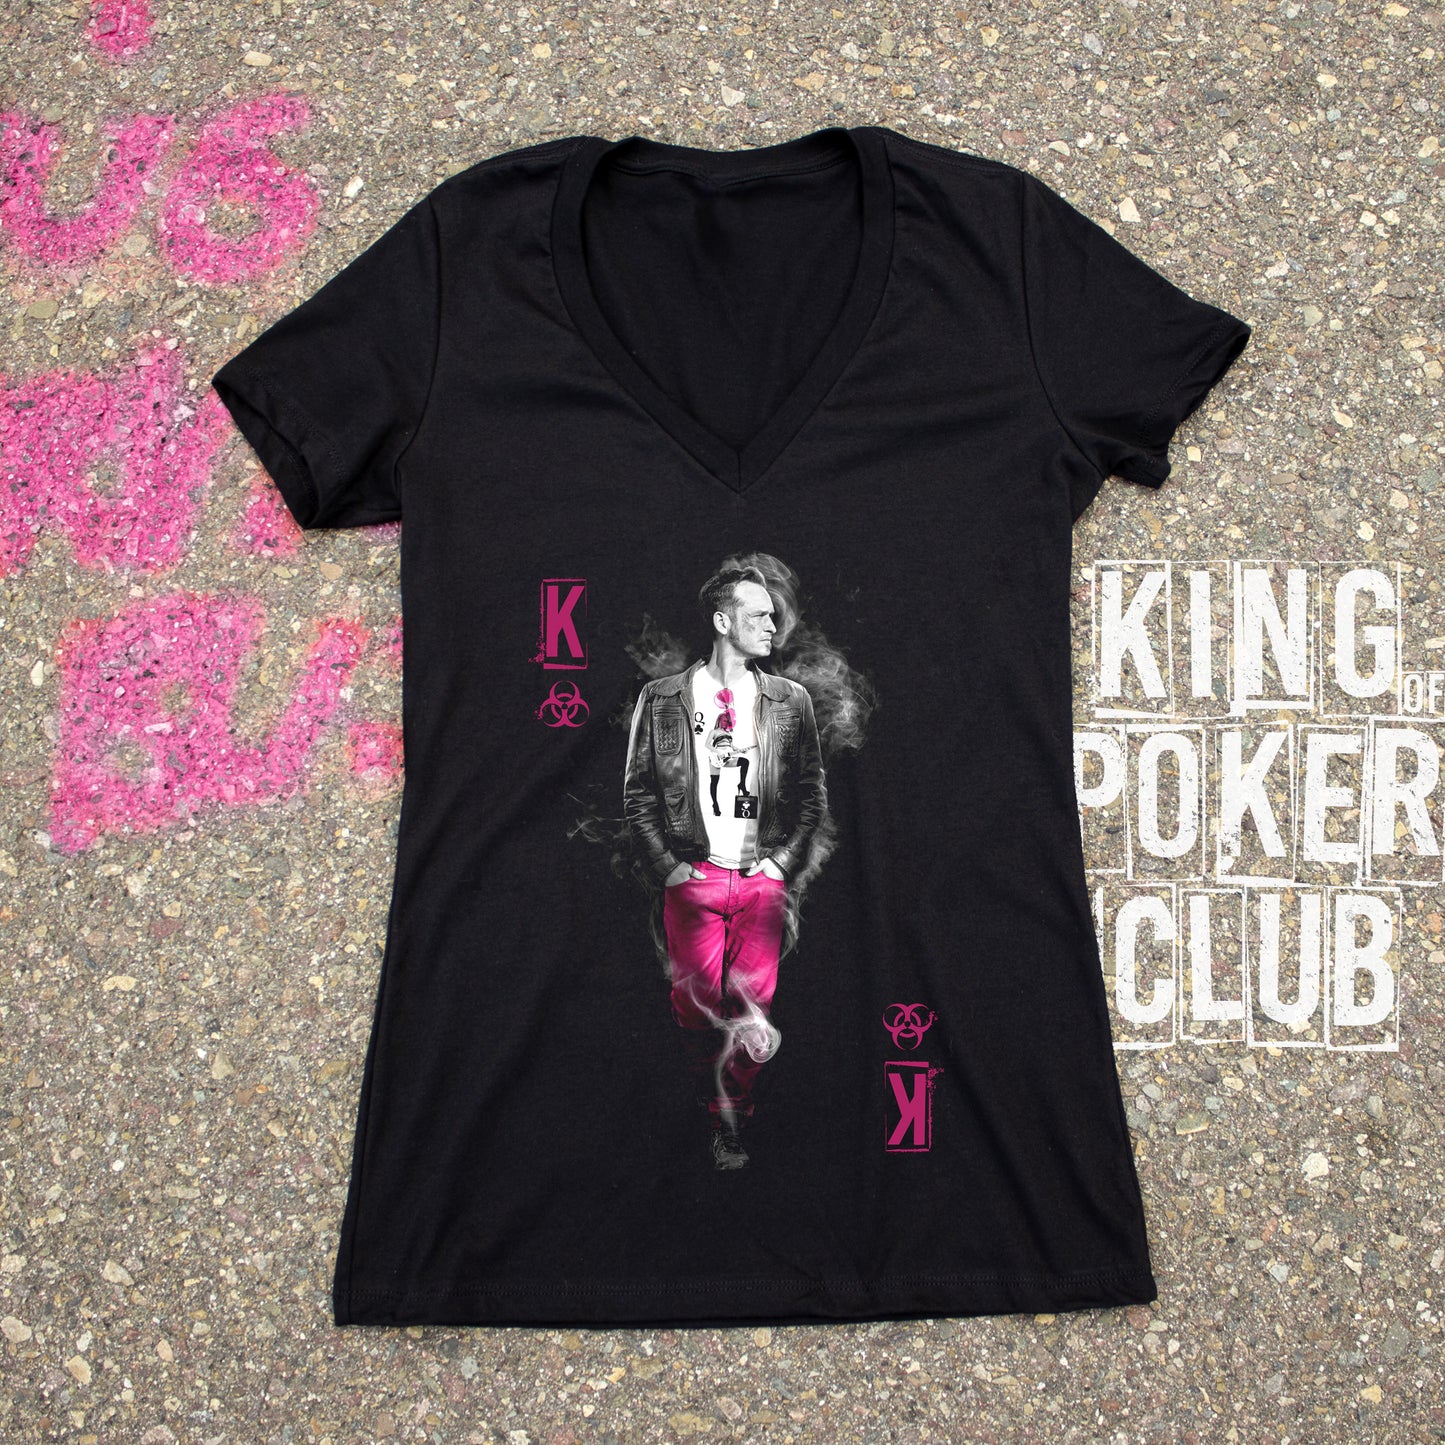 Le t-shirt col V plongeant Roi du Poker Club